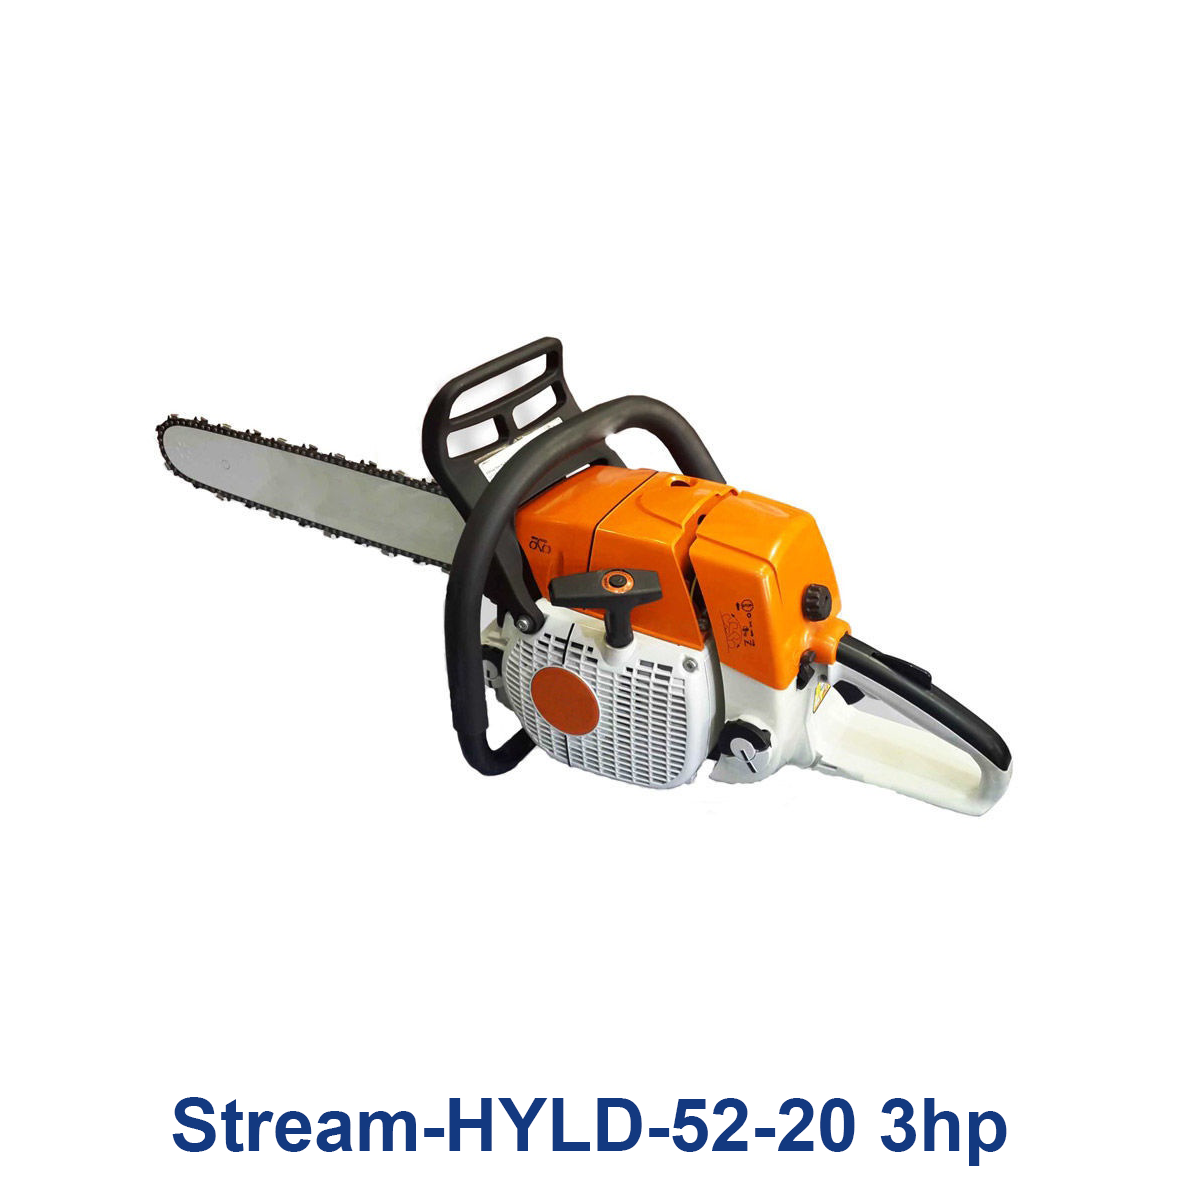 Stream-HYLD-52-20